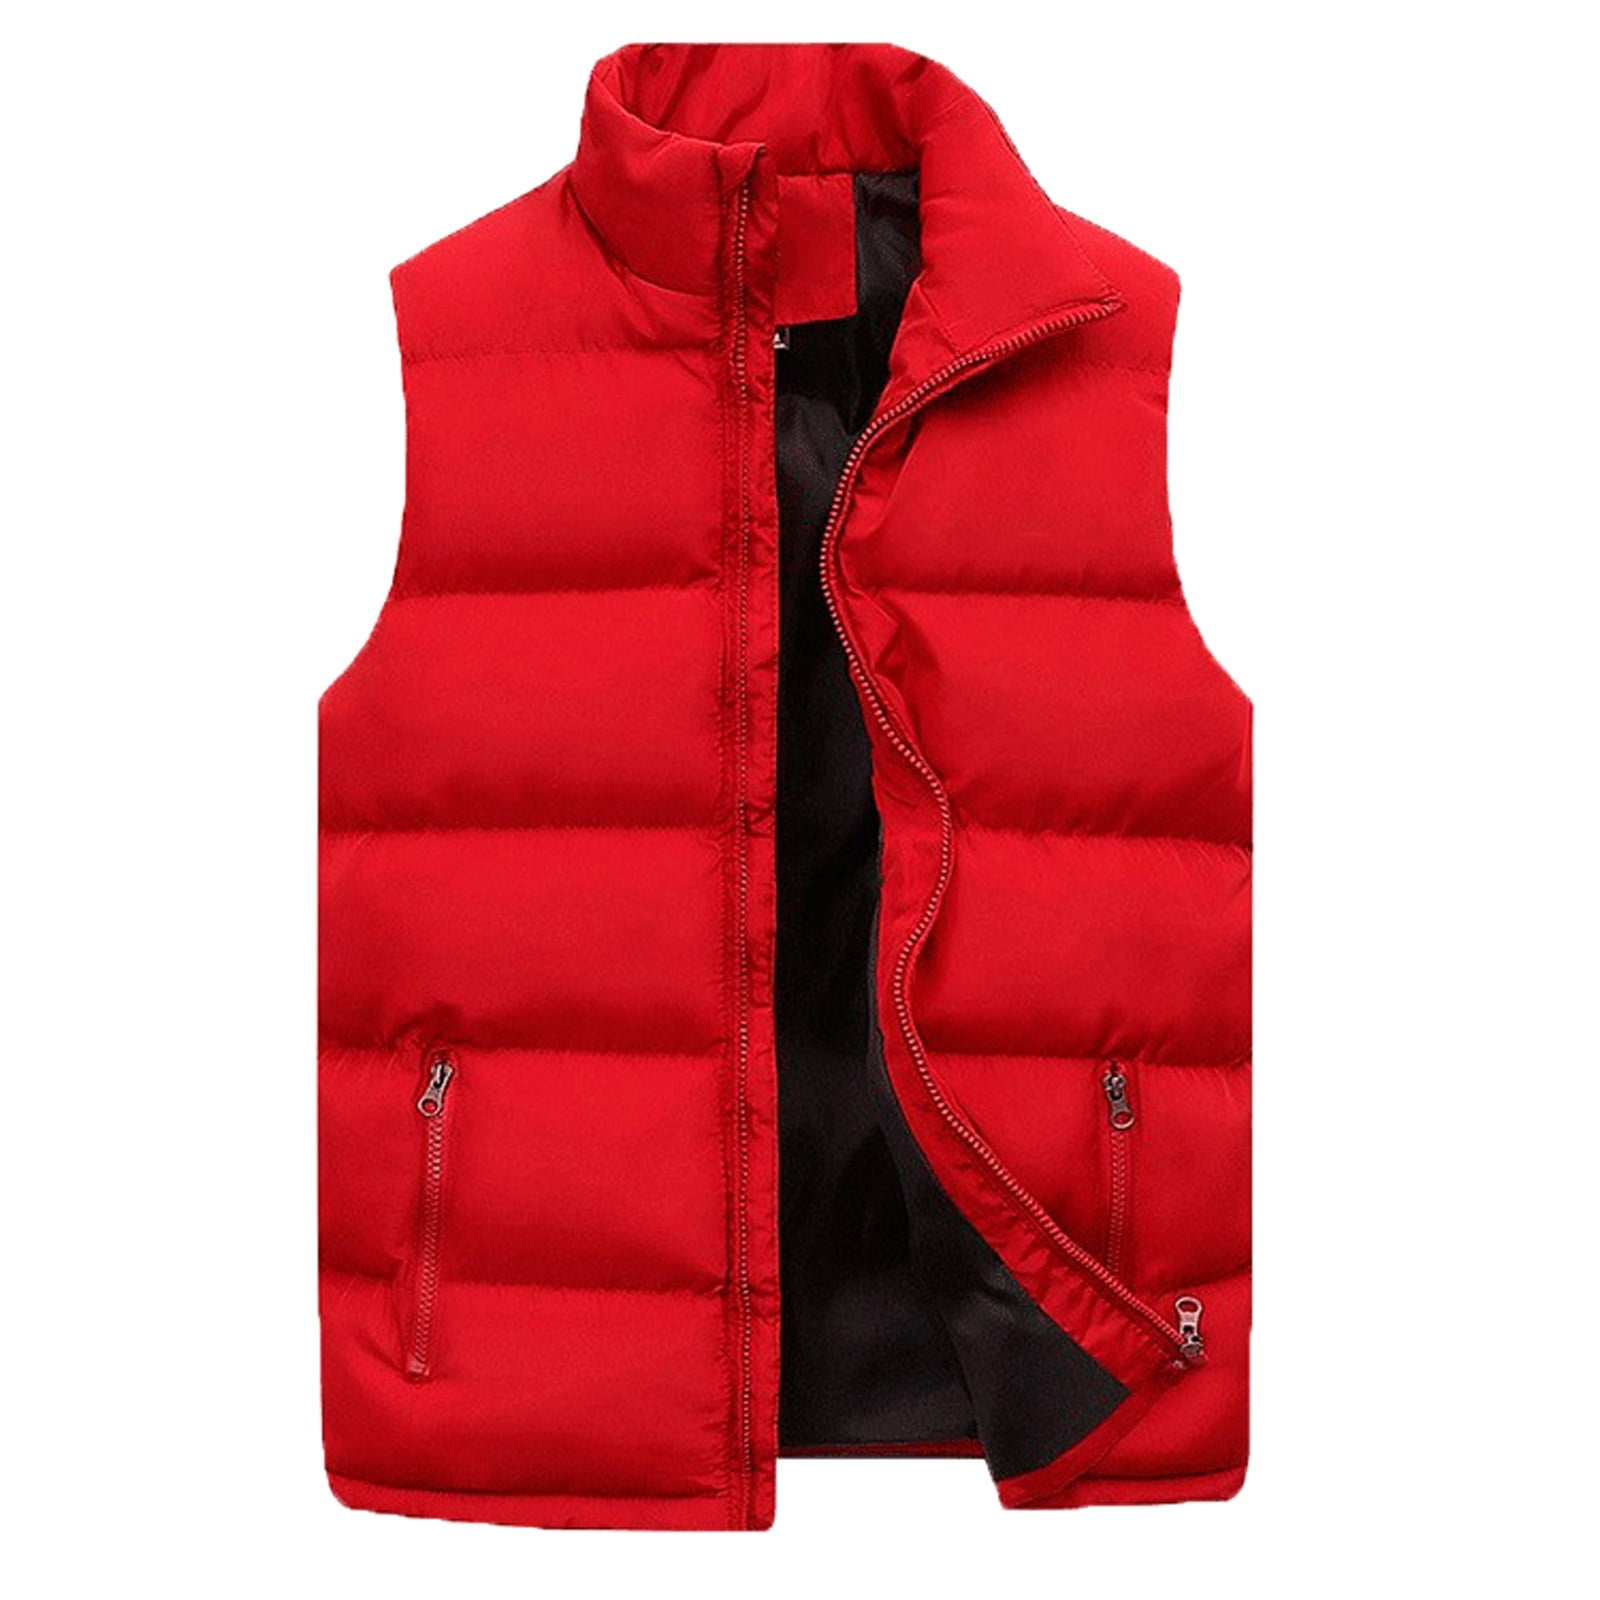 HAXMNOU Men's Winter Warm Down Quilted Vest Body Sleeveless Padded Jacket  Coat Outwear Red XXXXXL